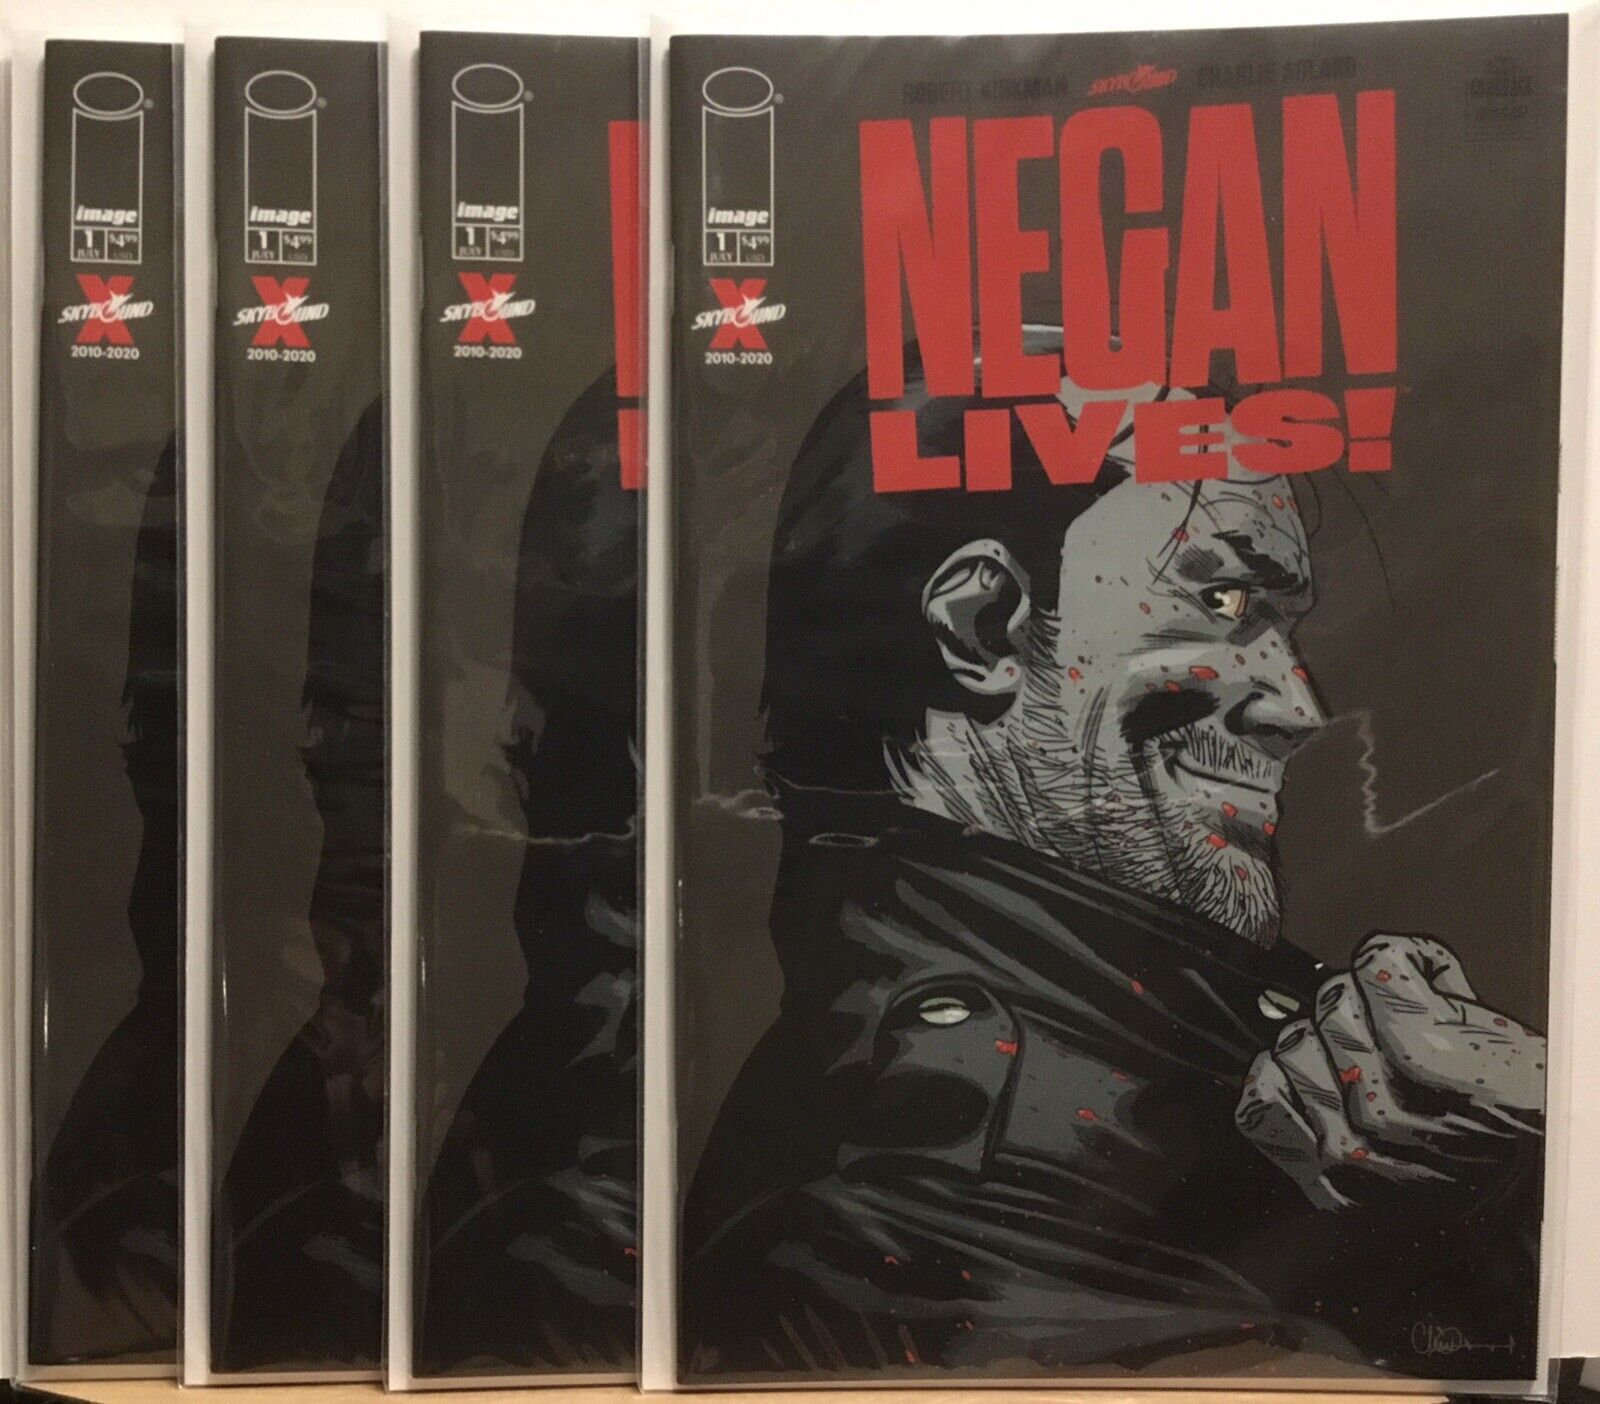 Negan Lives #1 Five Books For $12 VFN/NM